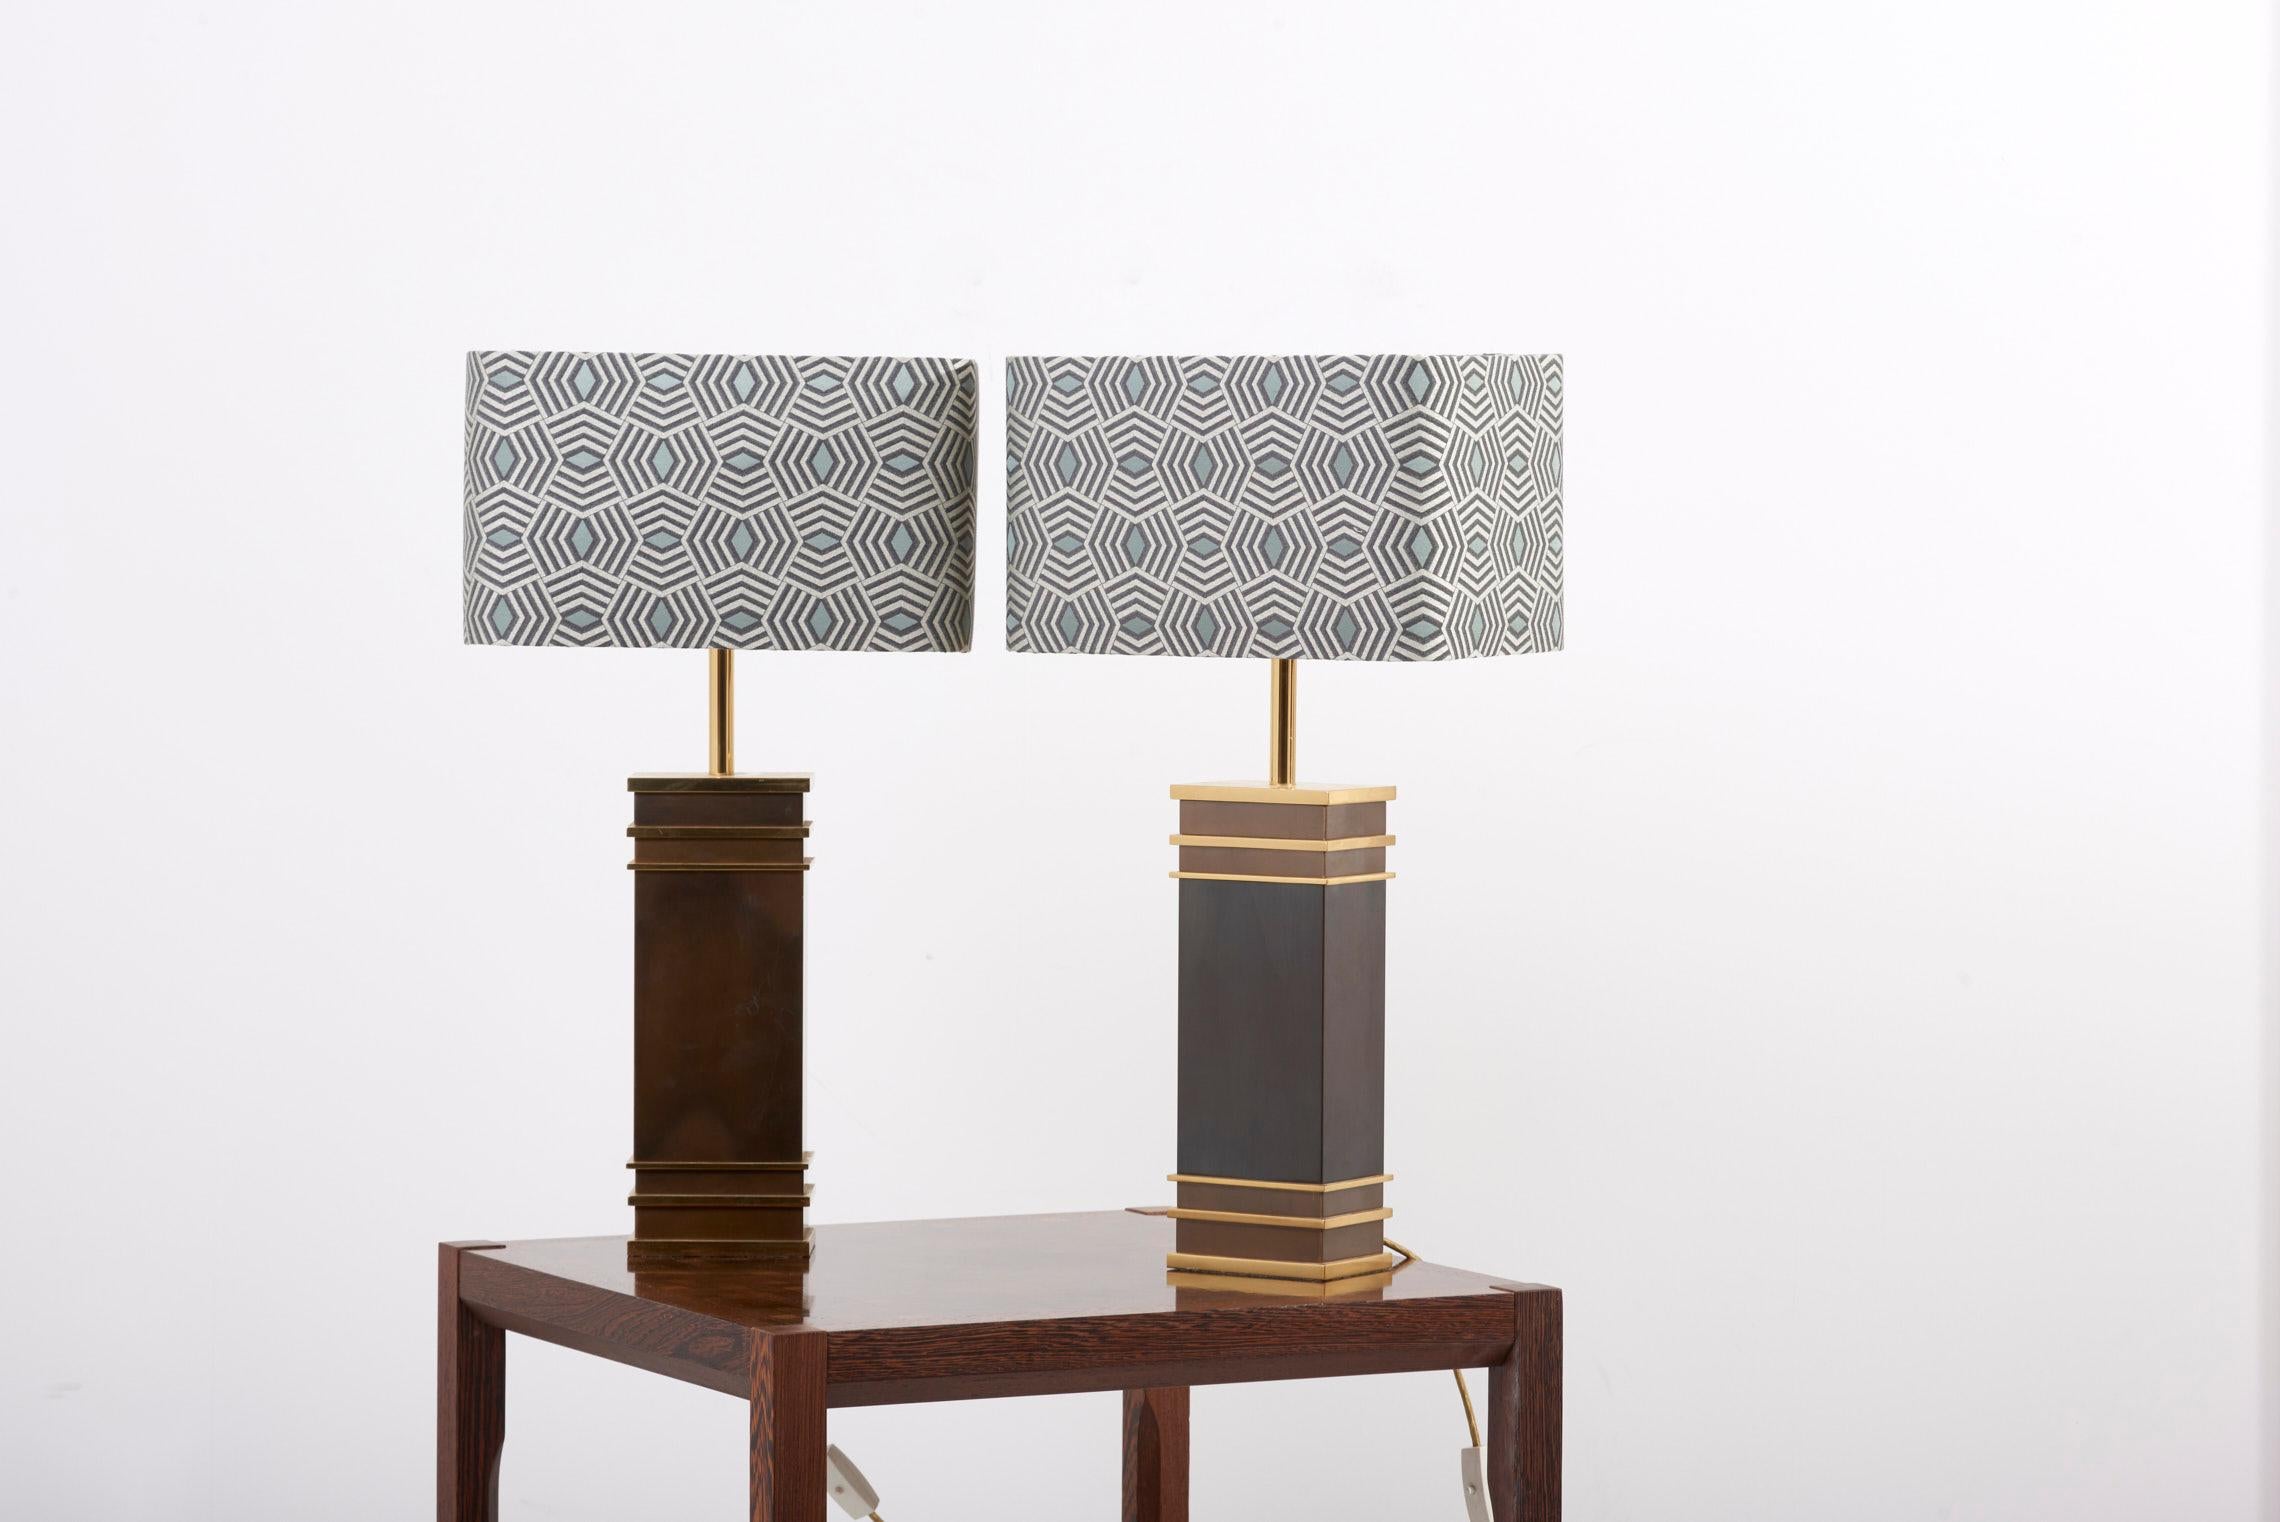 Pair of Monumental Midcentury Table Lamps by Vereinigte Werkstätten, Germany For Sale 2